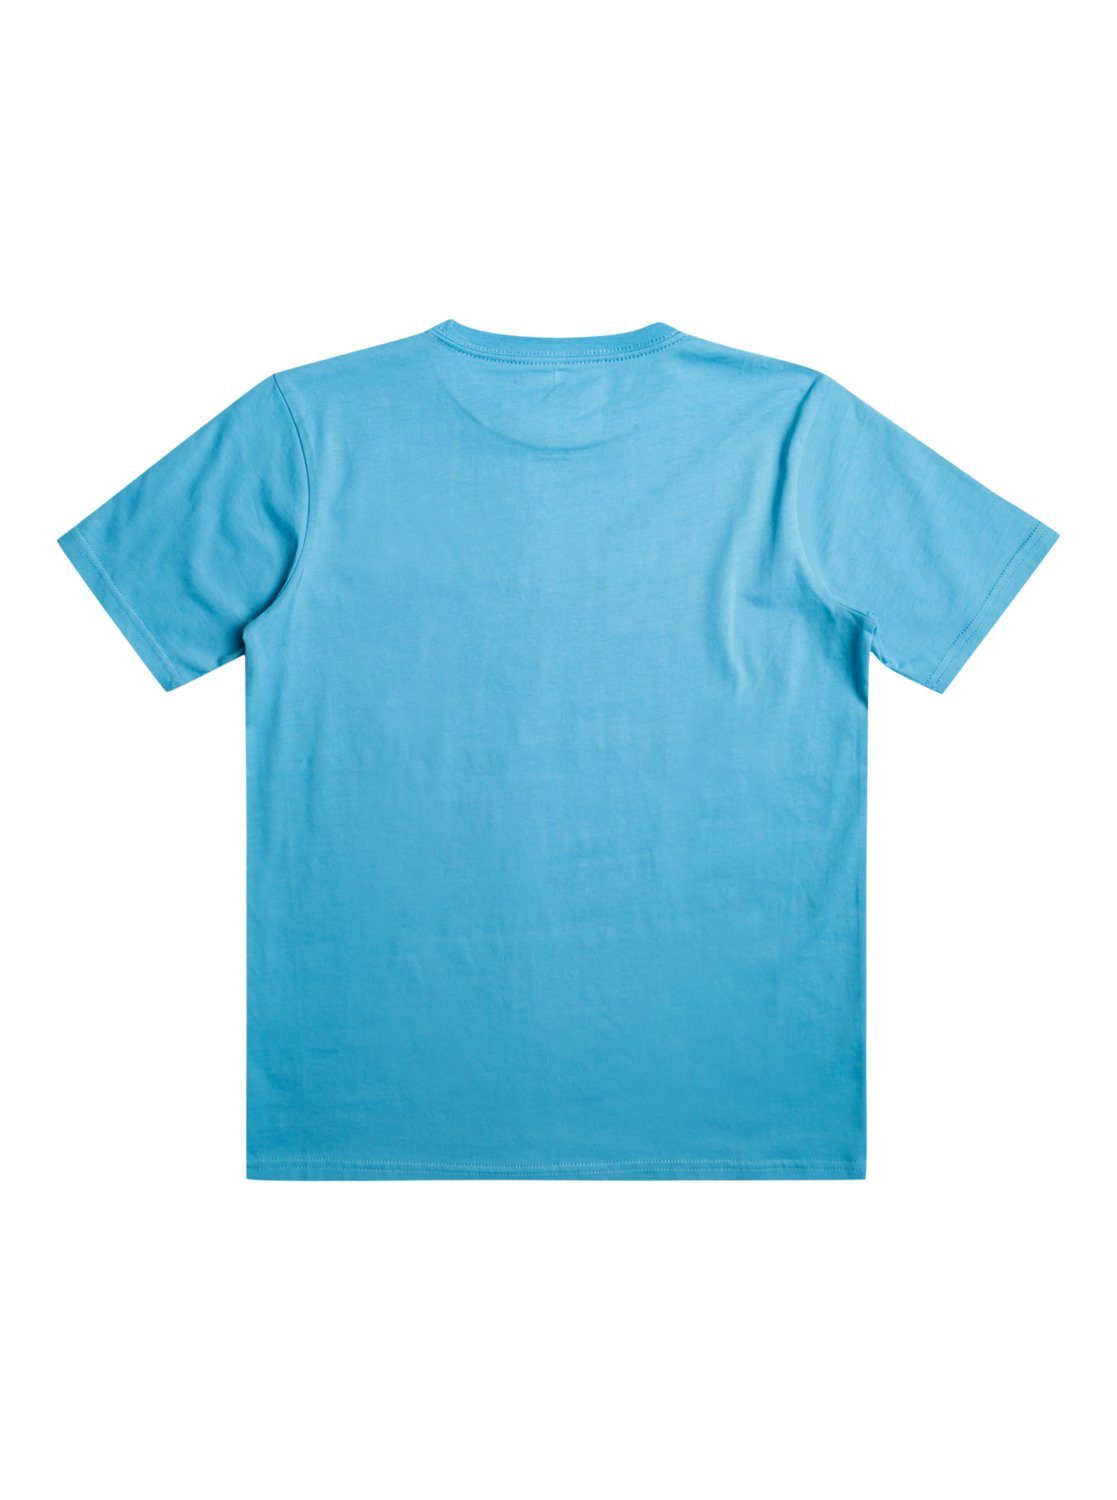 Omni Quiksilver Azure Check Turn T-Shirt Blue